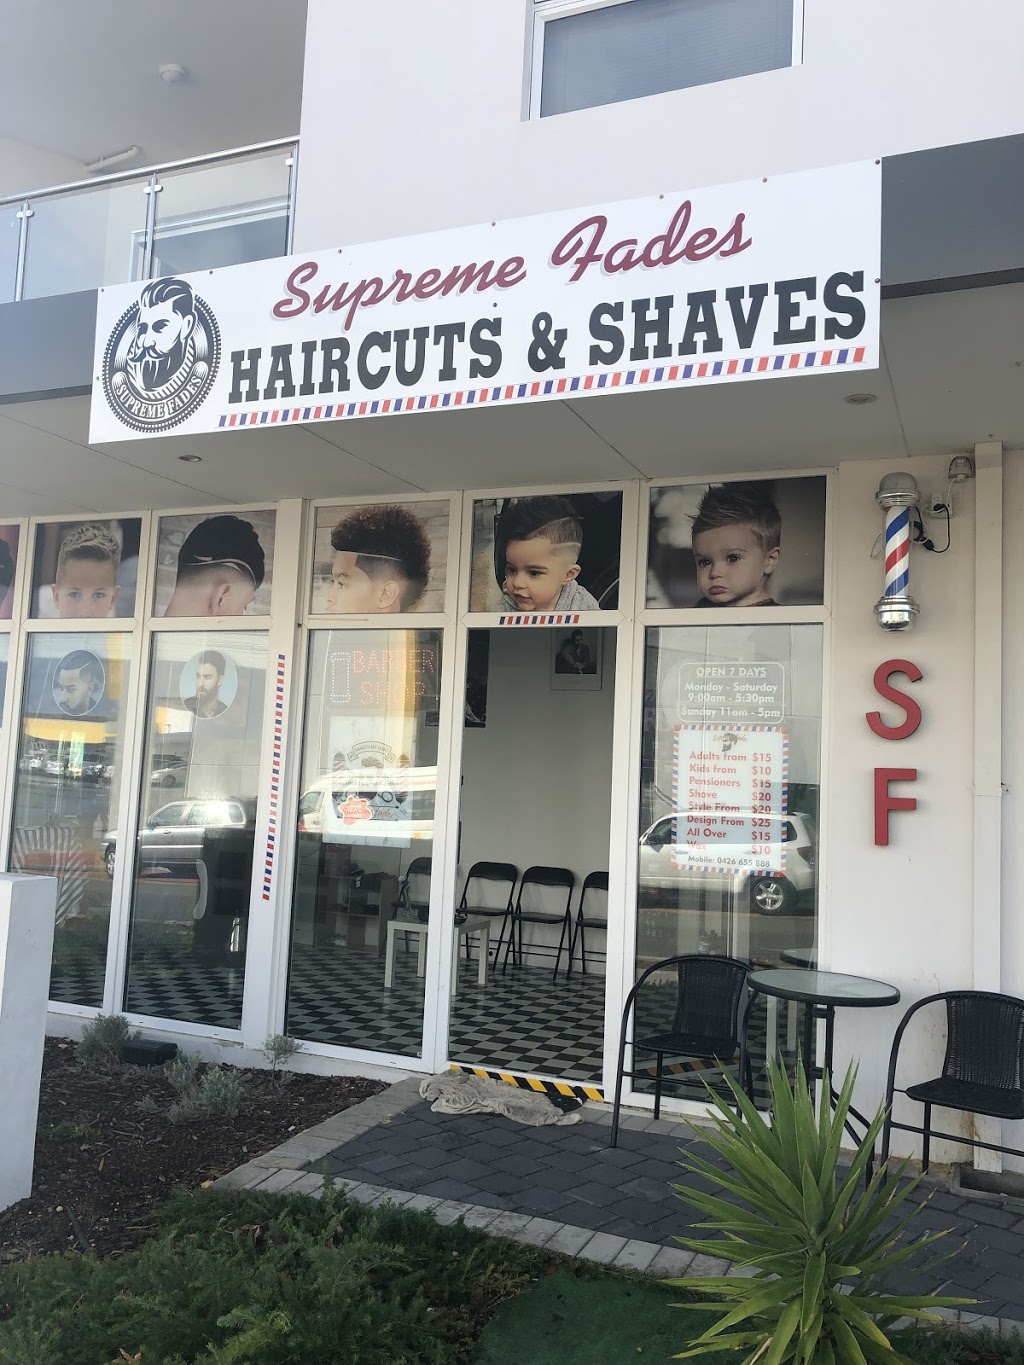 Supreme fades FM | hair care | 59 Melbourne Loop, Clarkson WA 6030, Australia | 0426655888 OR +61 426 655 888